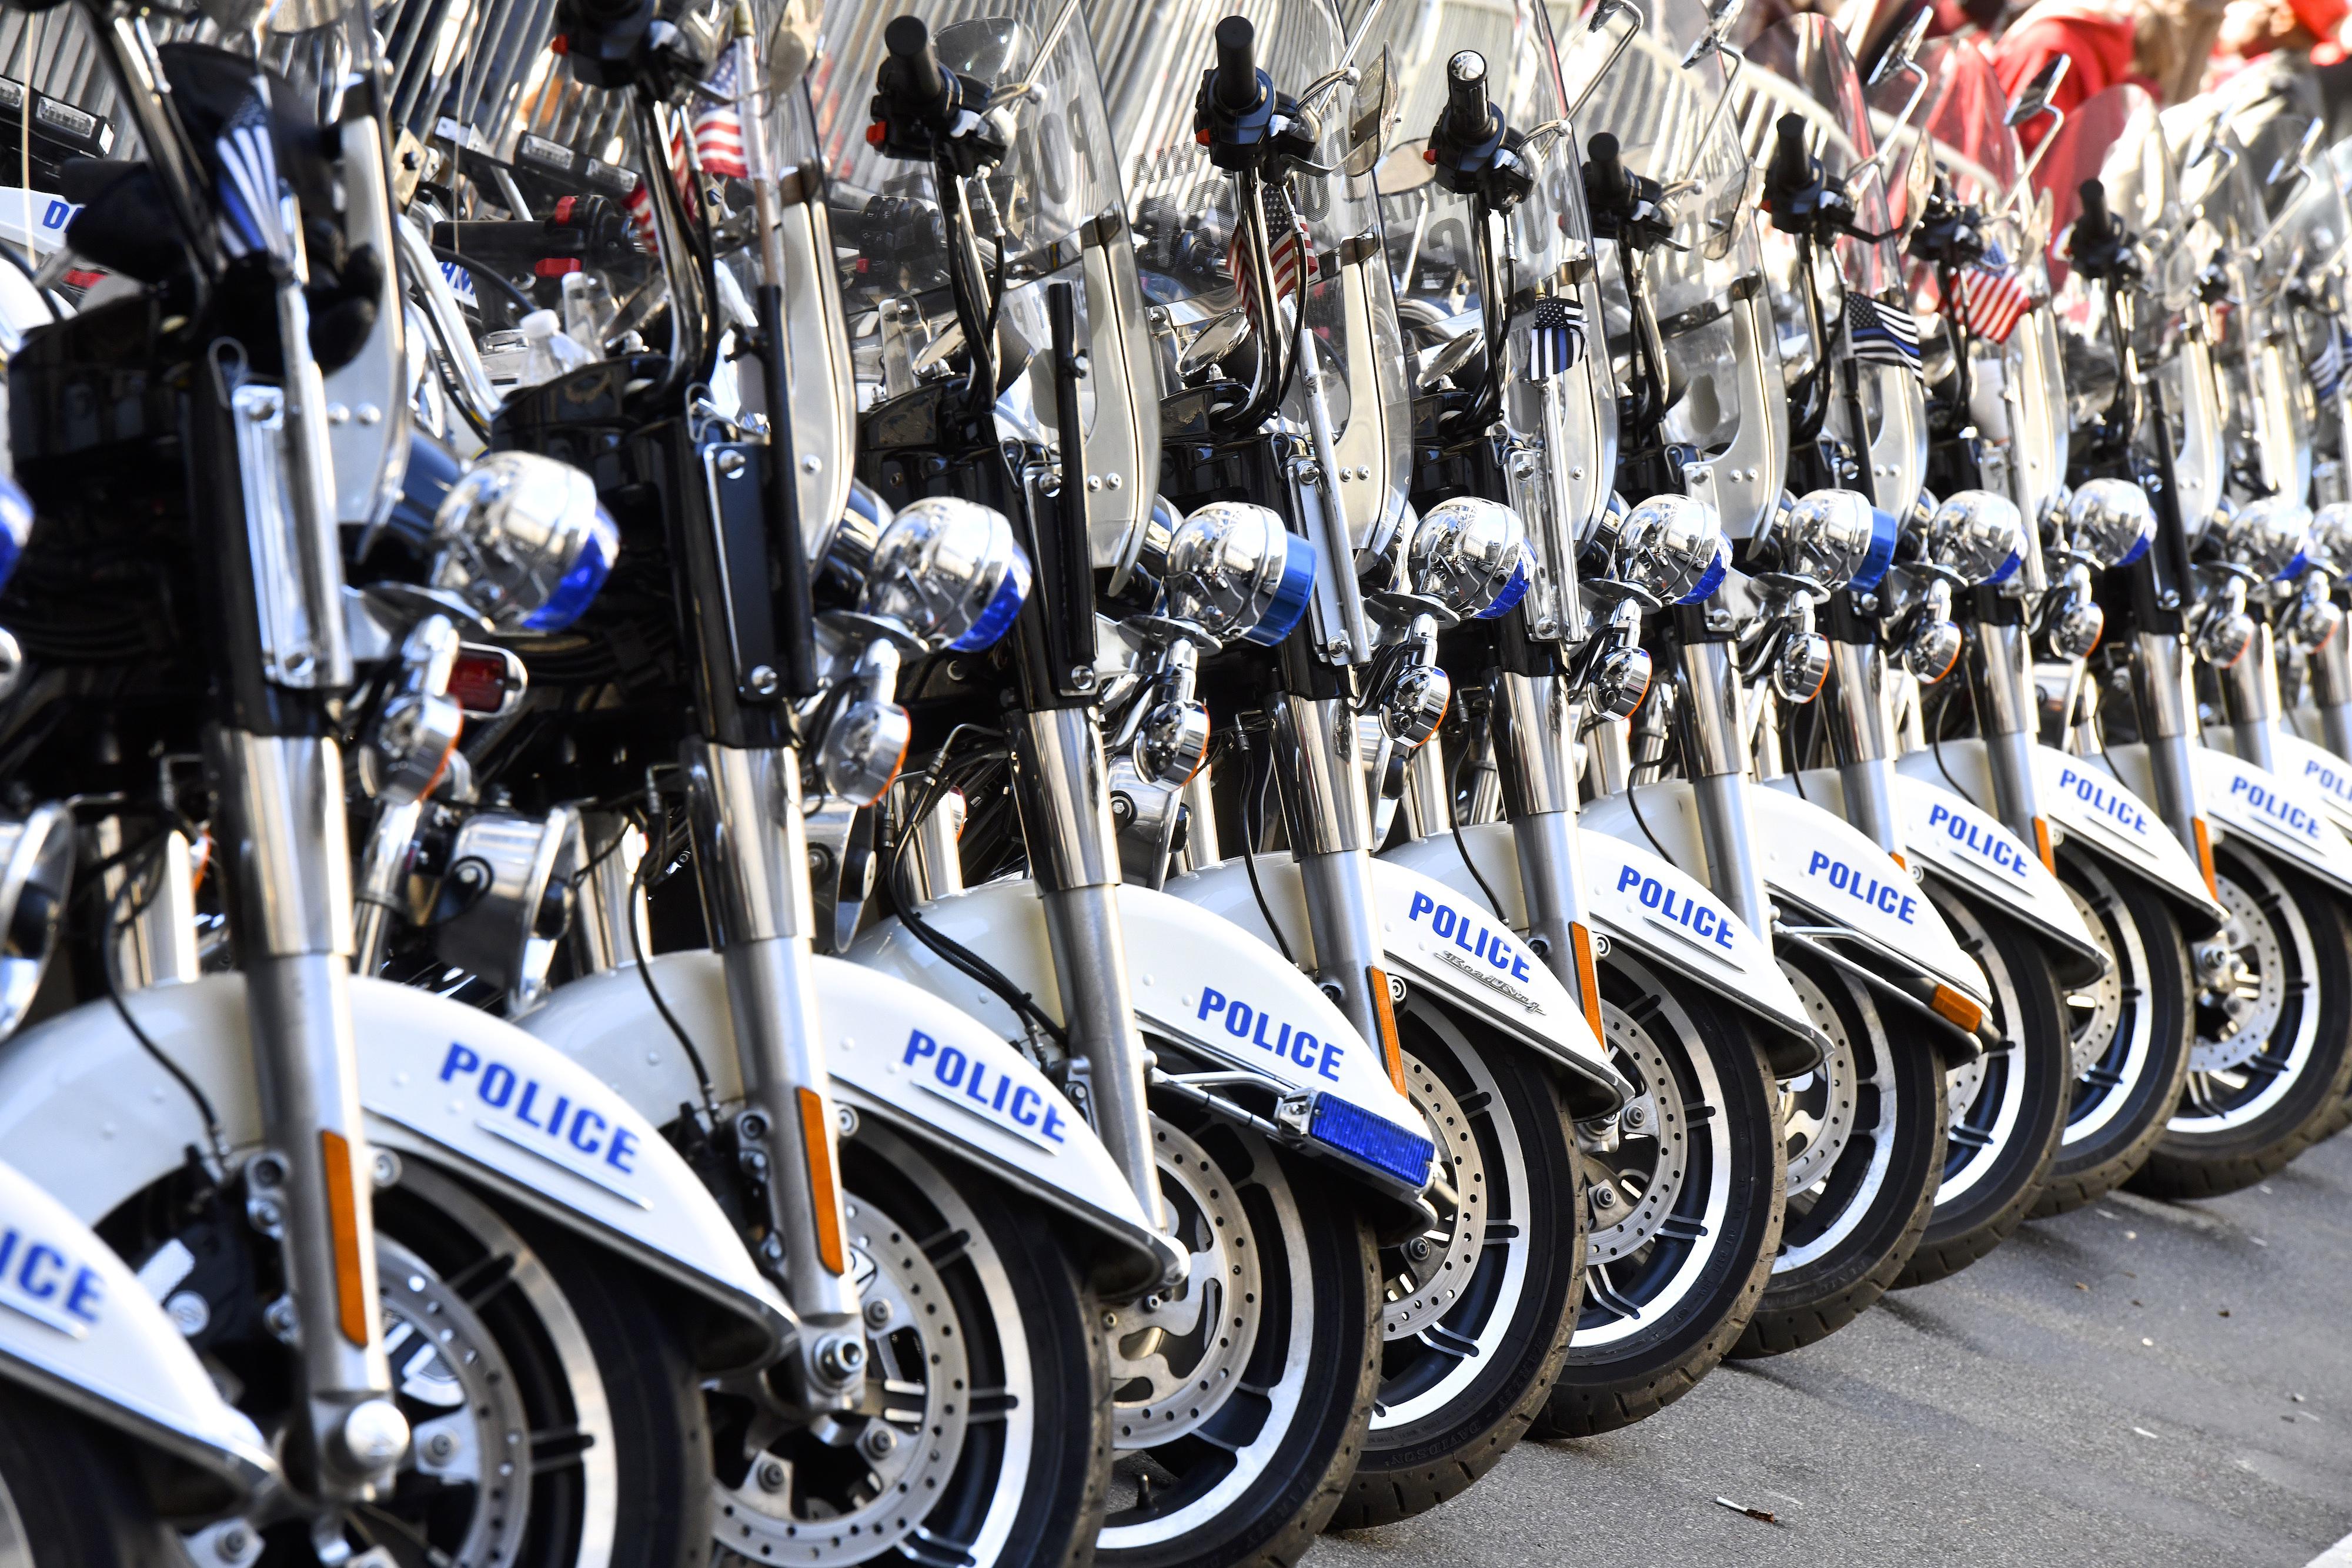 Philadelphia Police motorcycles form a line in a parade on Jan. 1, 2019 in Philadelphia, Pennsylvania. 